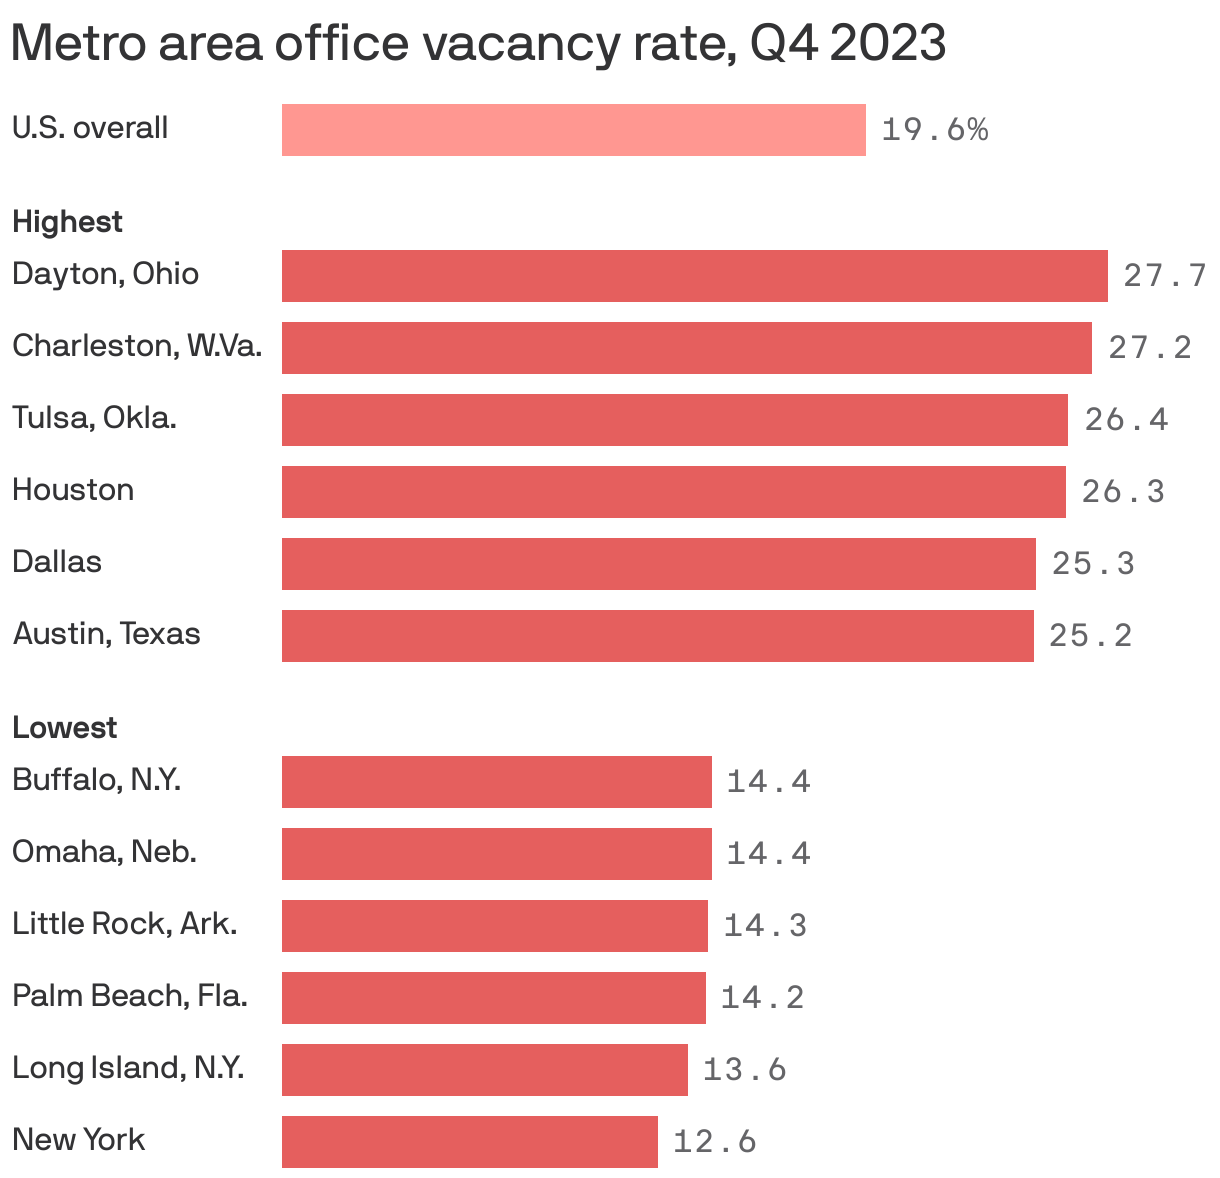 Metro area office vacancy rate, Q4 2023